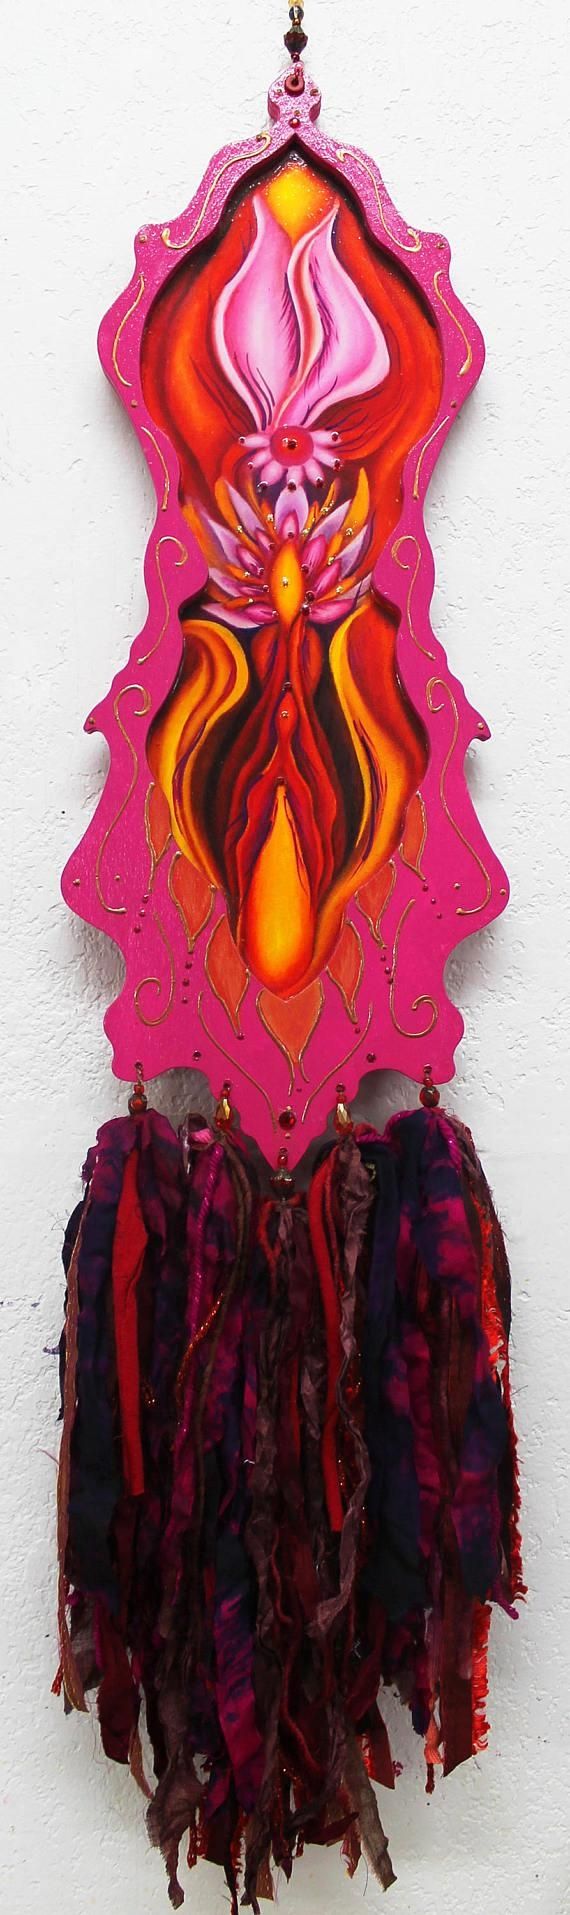 Yoni Art Vulva Art Exotic Flower Feminine Wall Art Vagina For Sensual Wall Art (View 12 of 20)